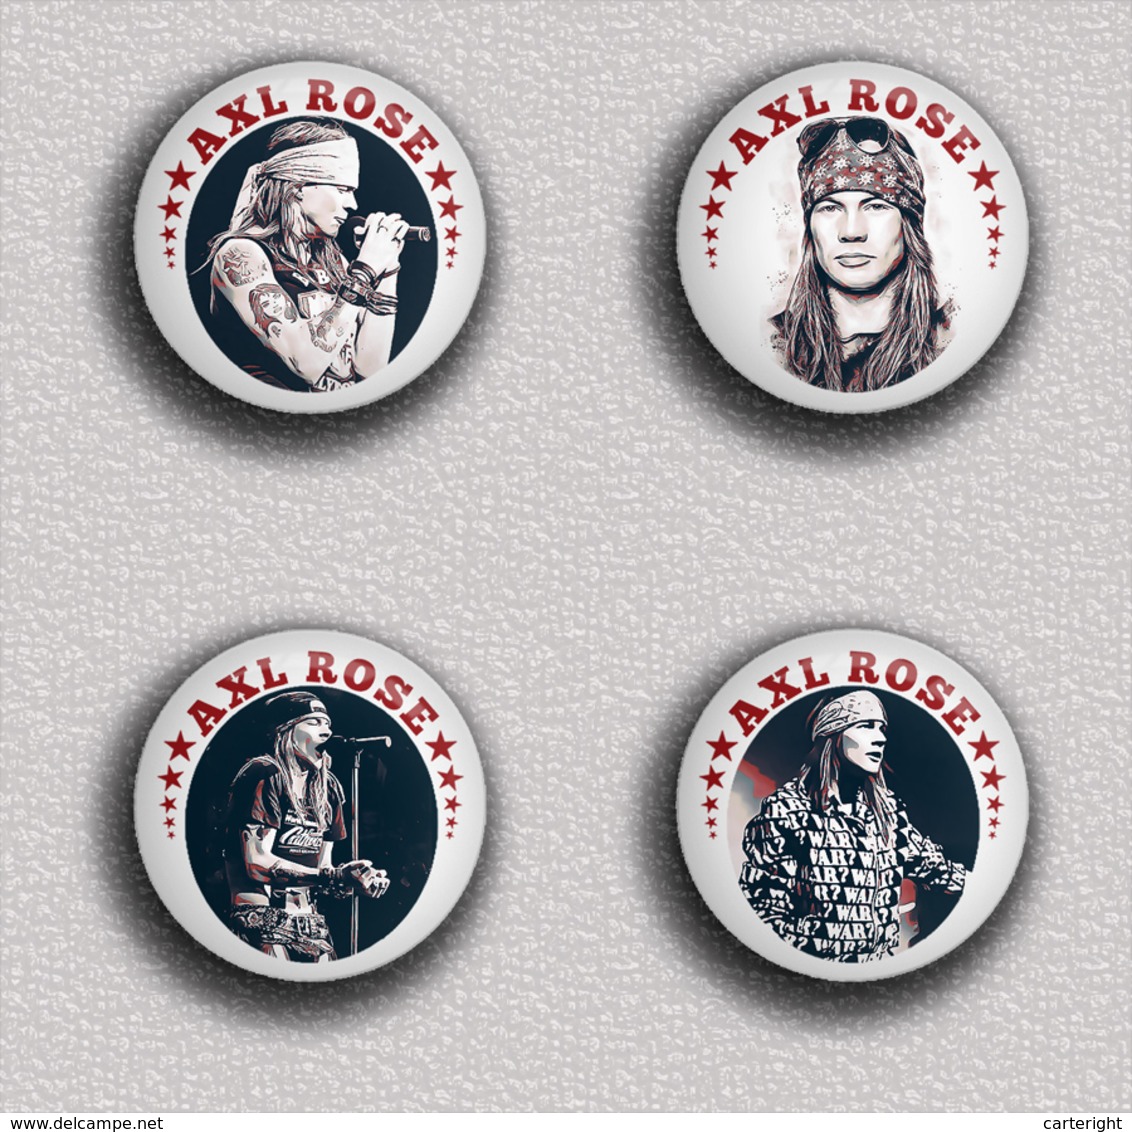 35 X Guns N' Roses BAND - Axl Rose Music Fan ART BADGE BUTTON PIN SET 1 (1inch/25mm Diameter) - Music